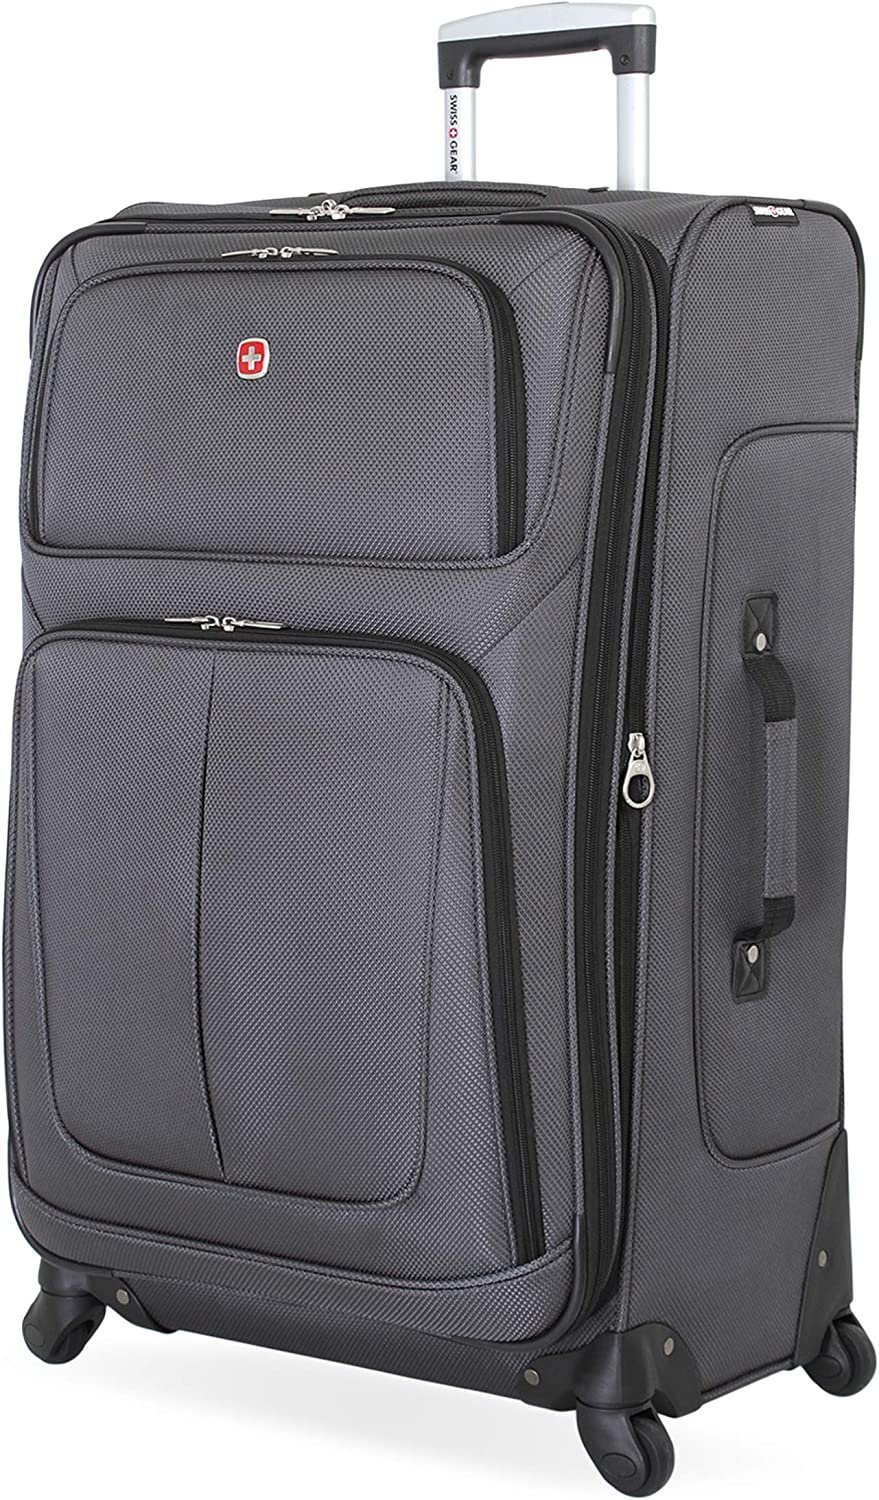 SwissGear Multi-Directional Rolling Traveler Suitcase, 29-Inch